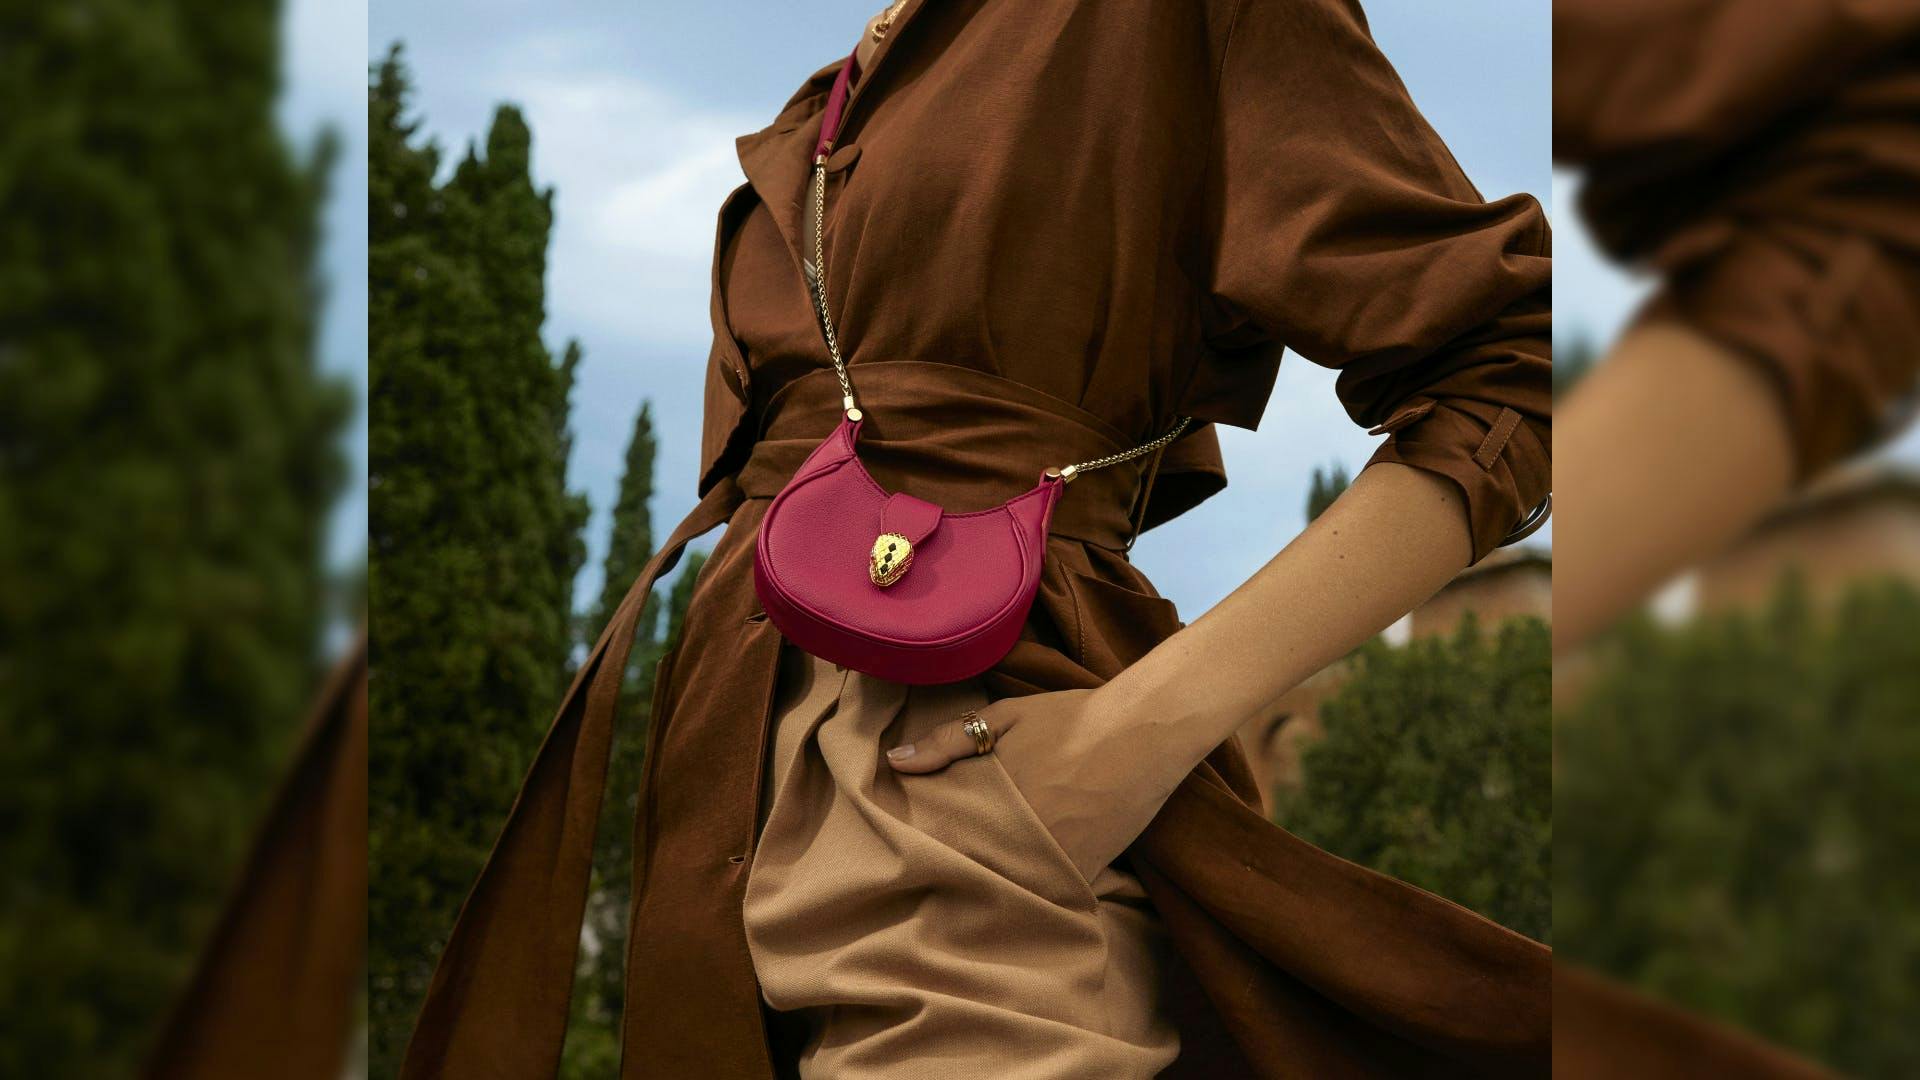 clothing apparel person human handbag bag accessories accessory